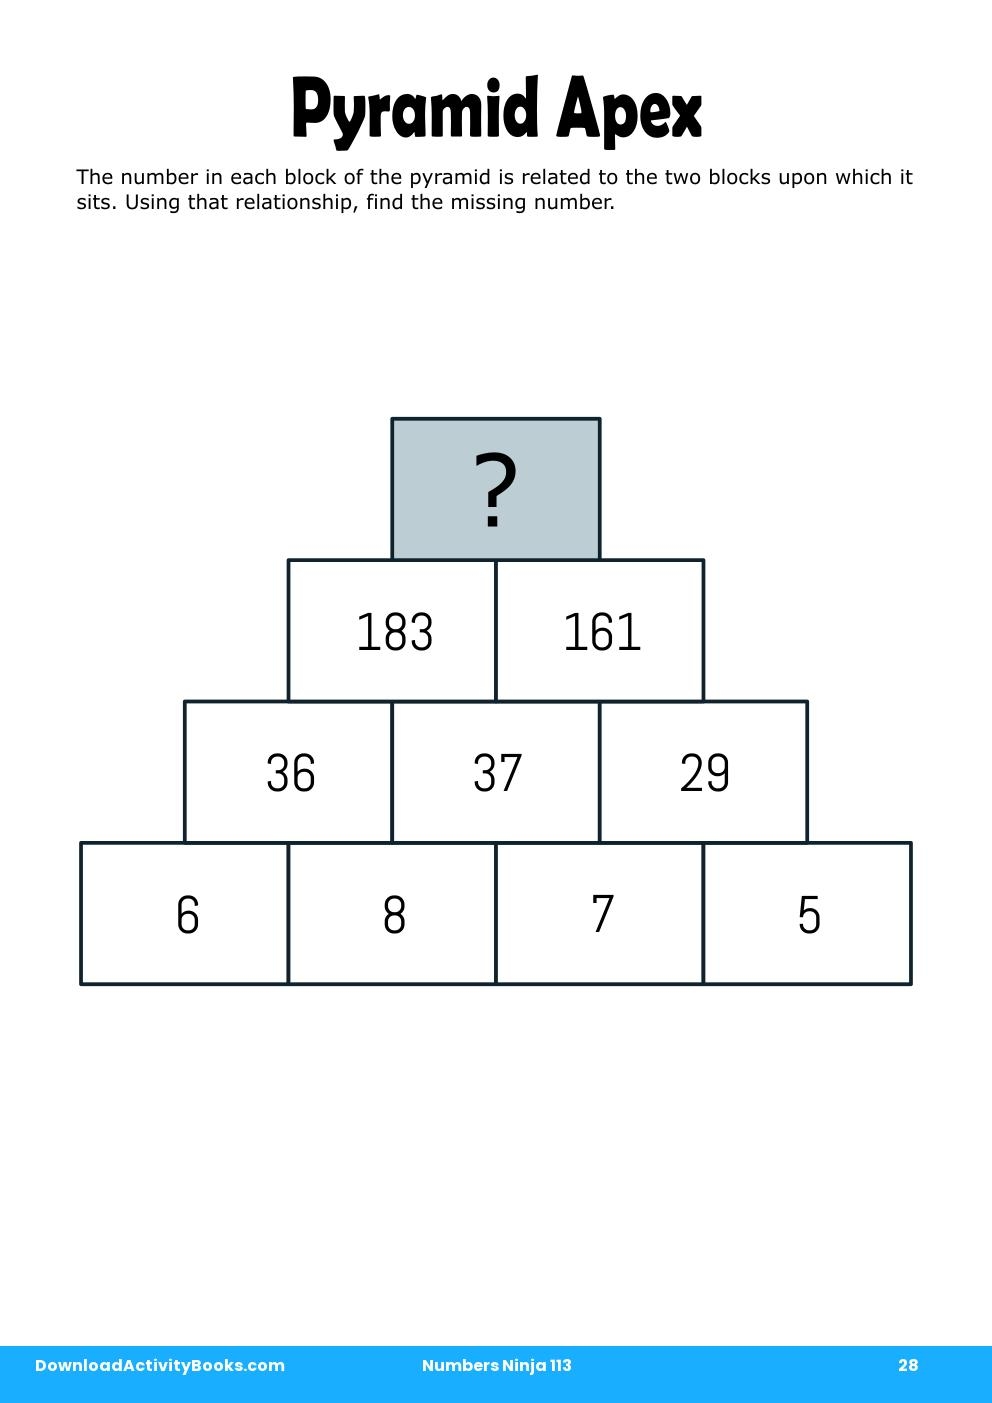 Pyramid Apex in Numbers Ninja 113